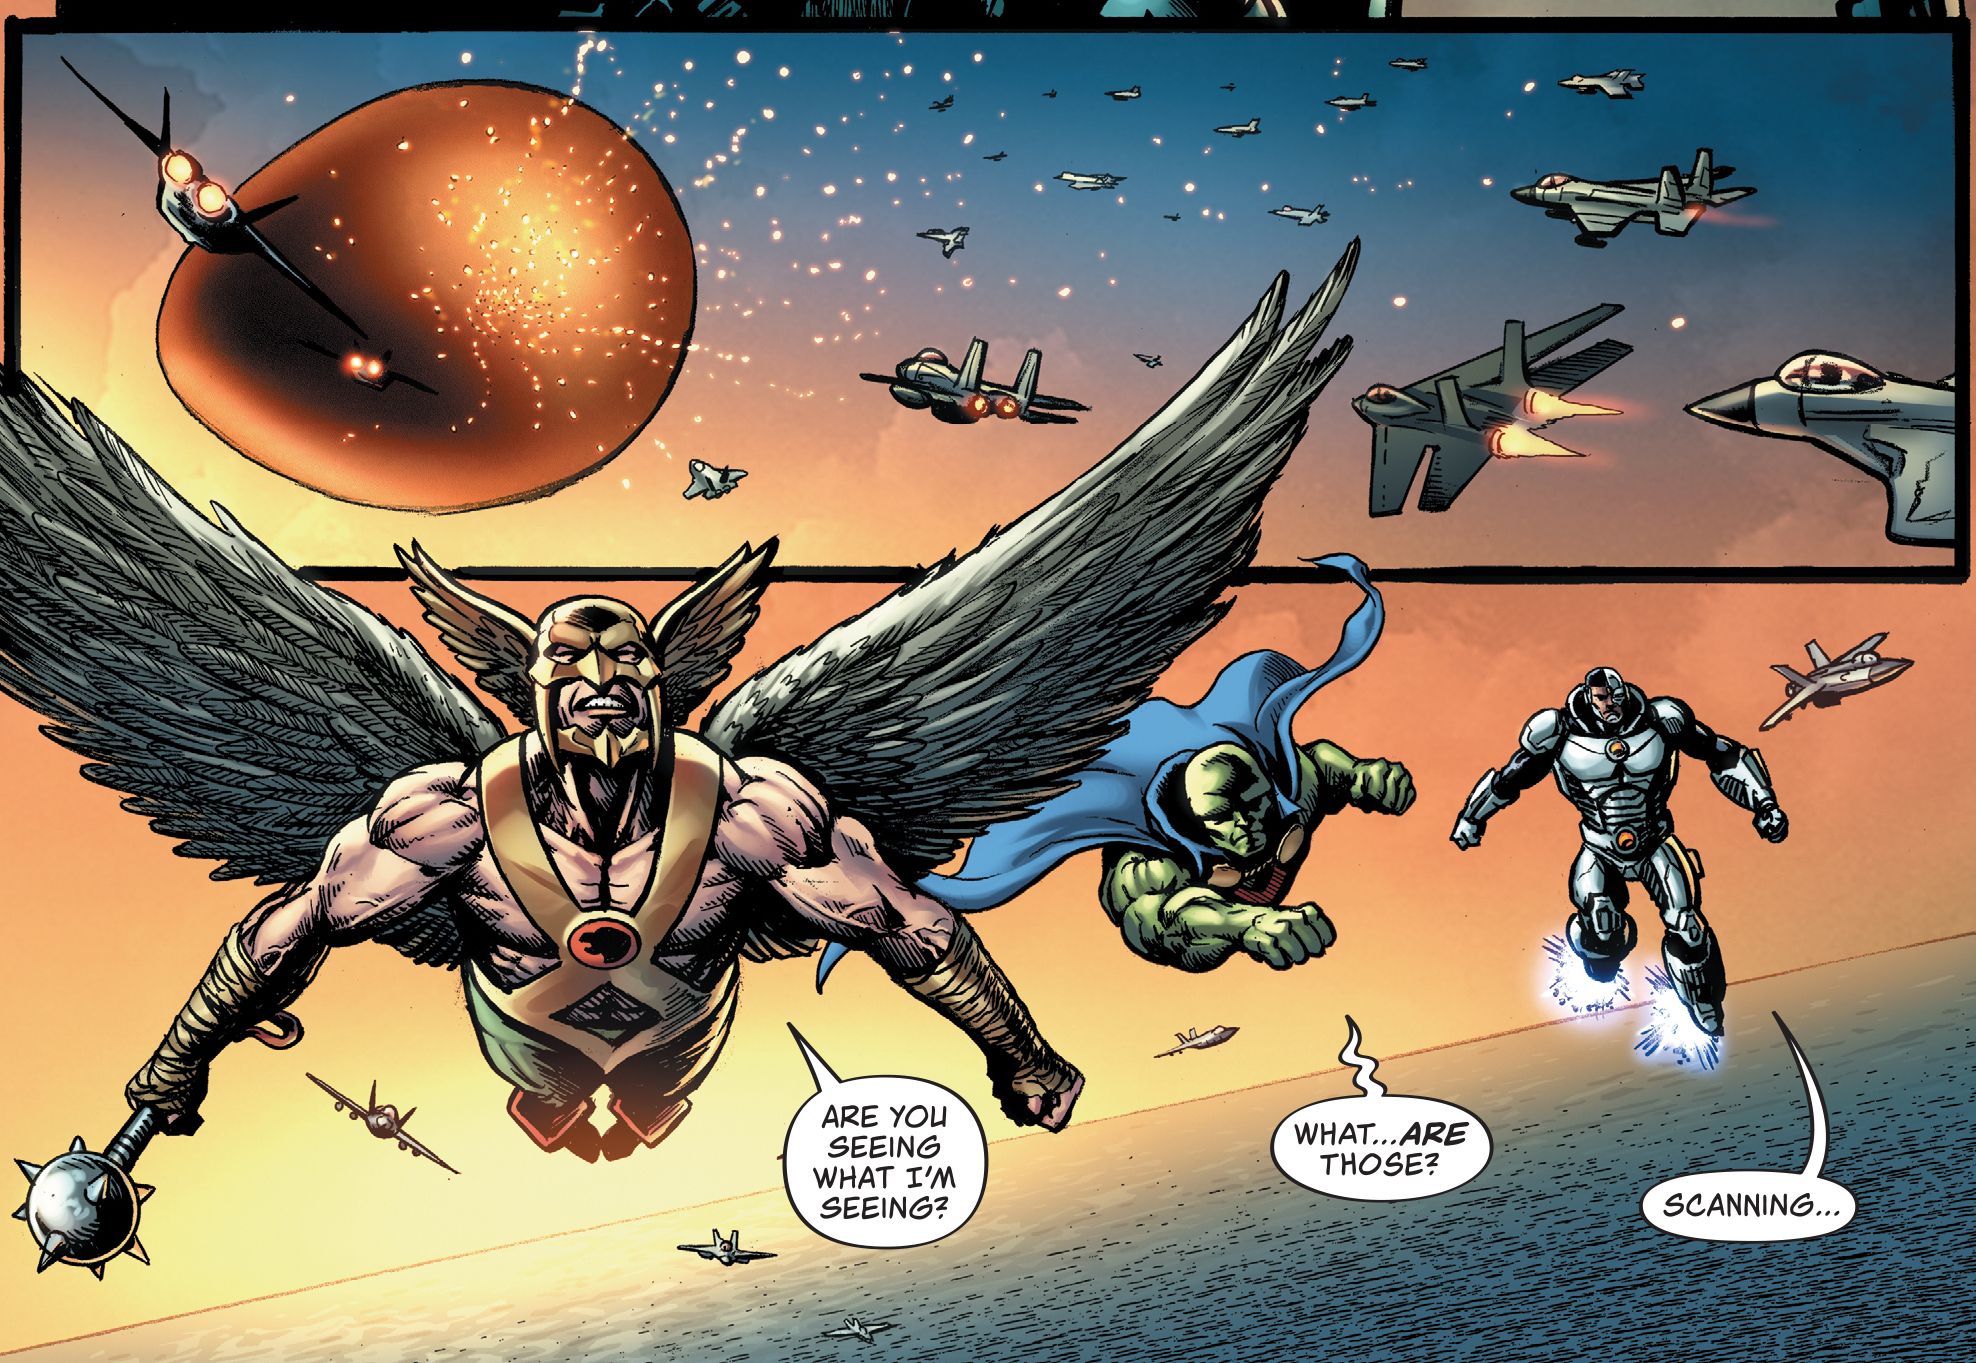 Hawkman and martian manhunter fight aliens